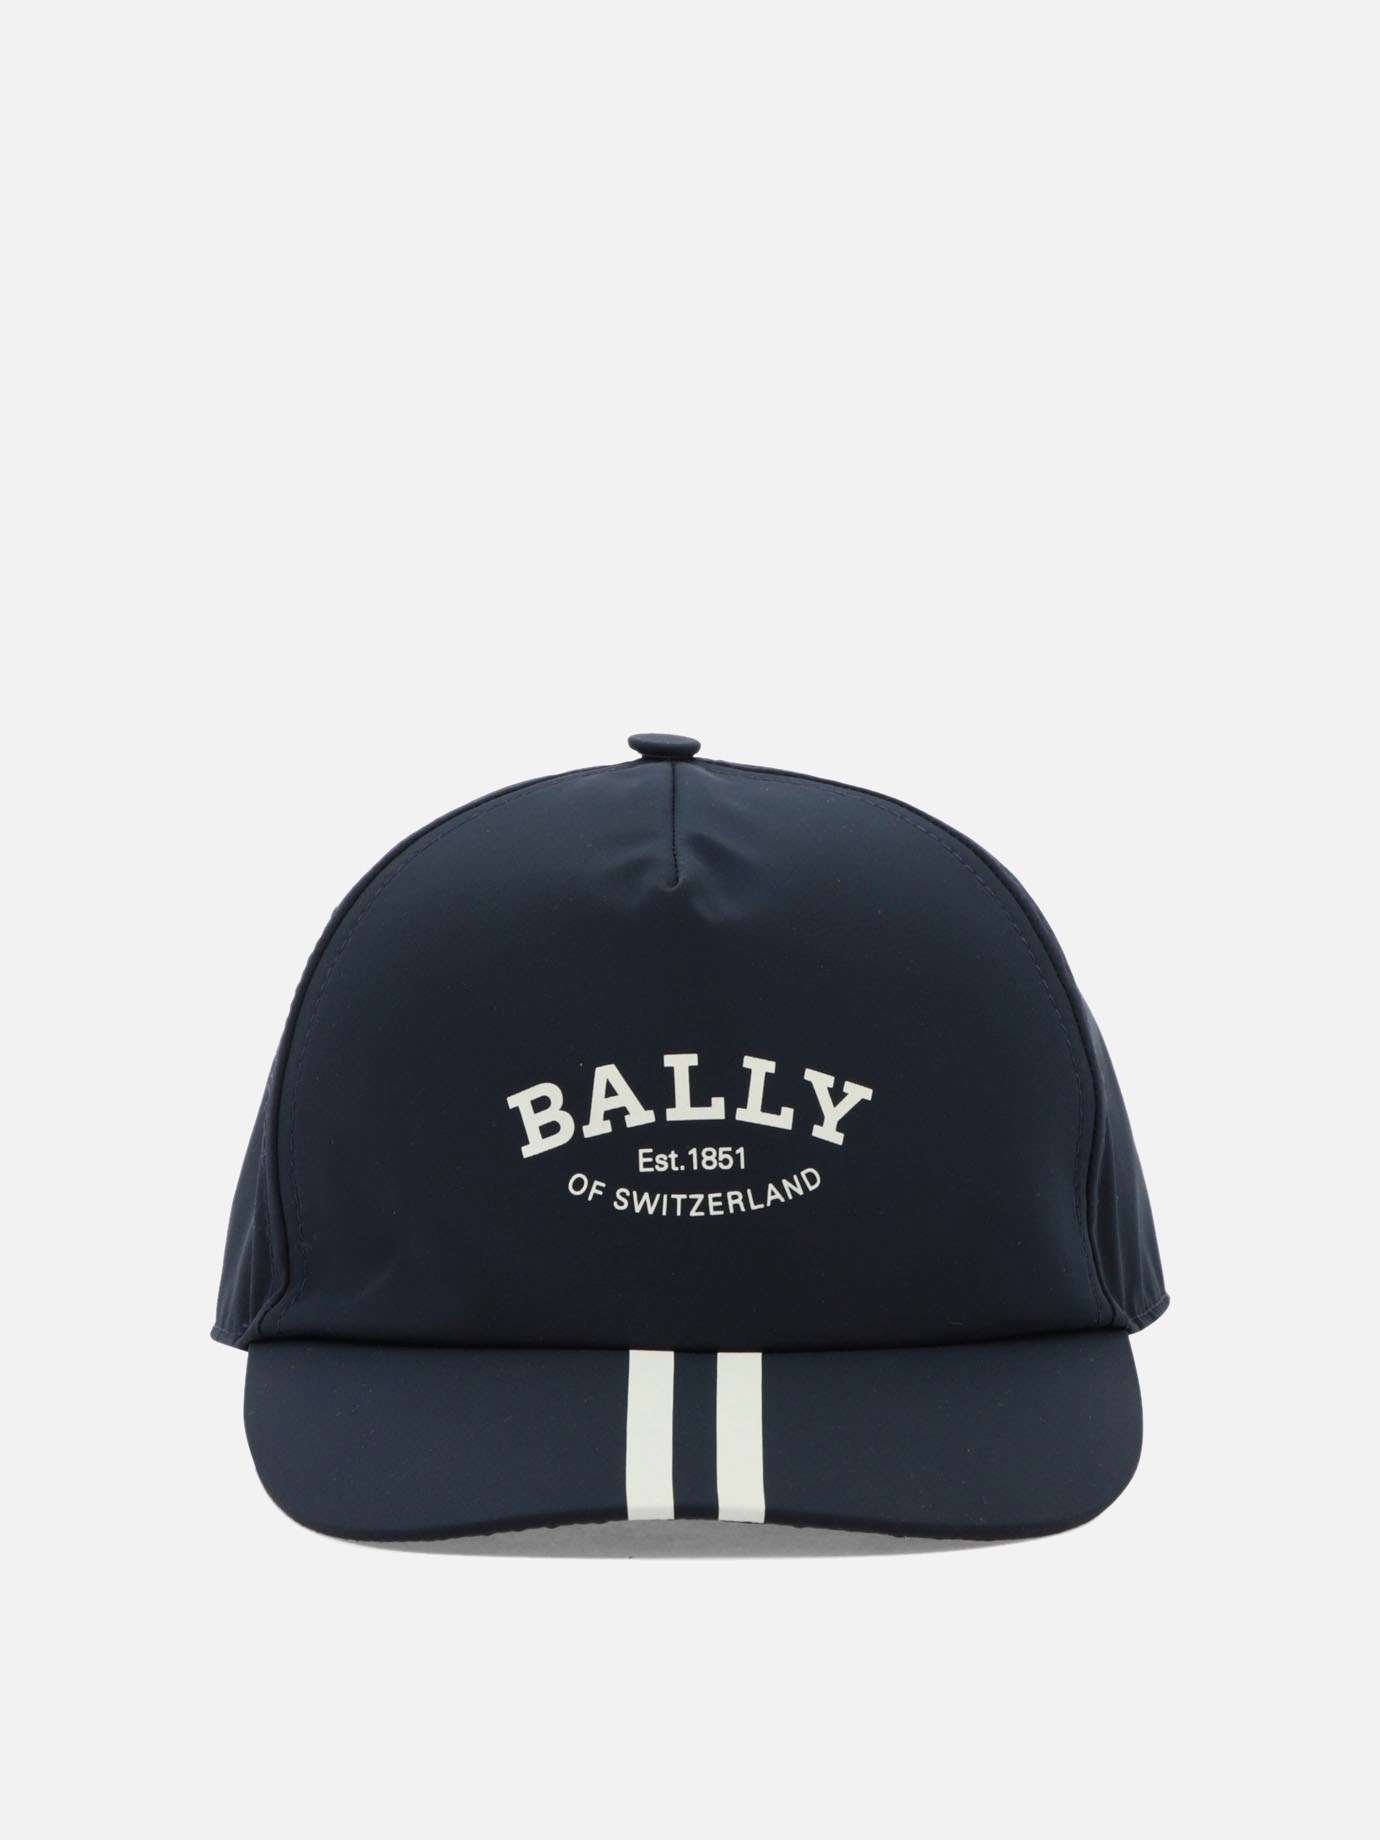  Est. 1851  baseball capby Bally - 2